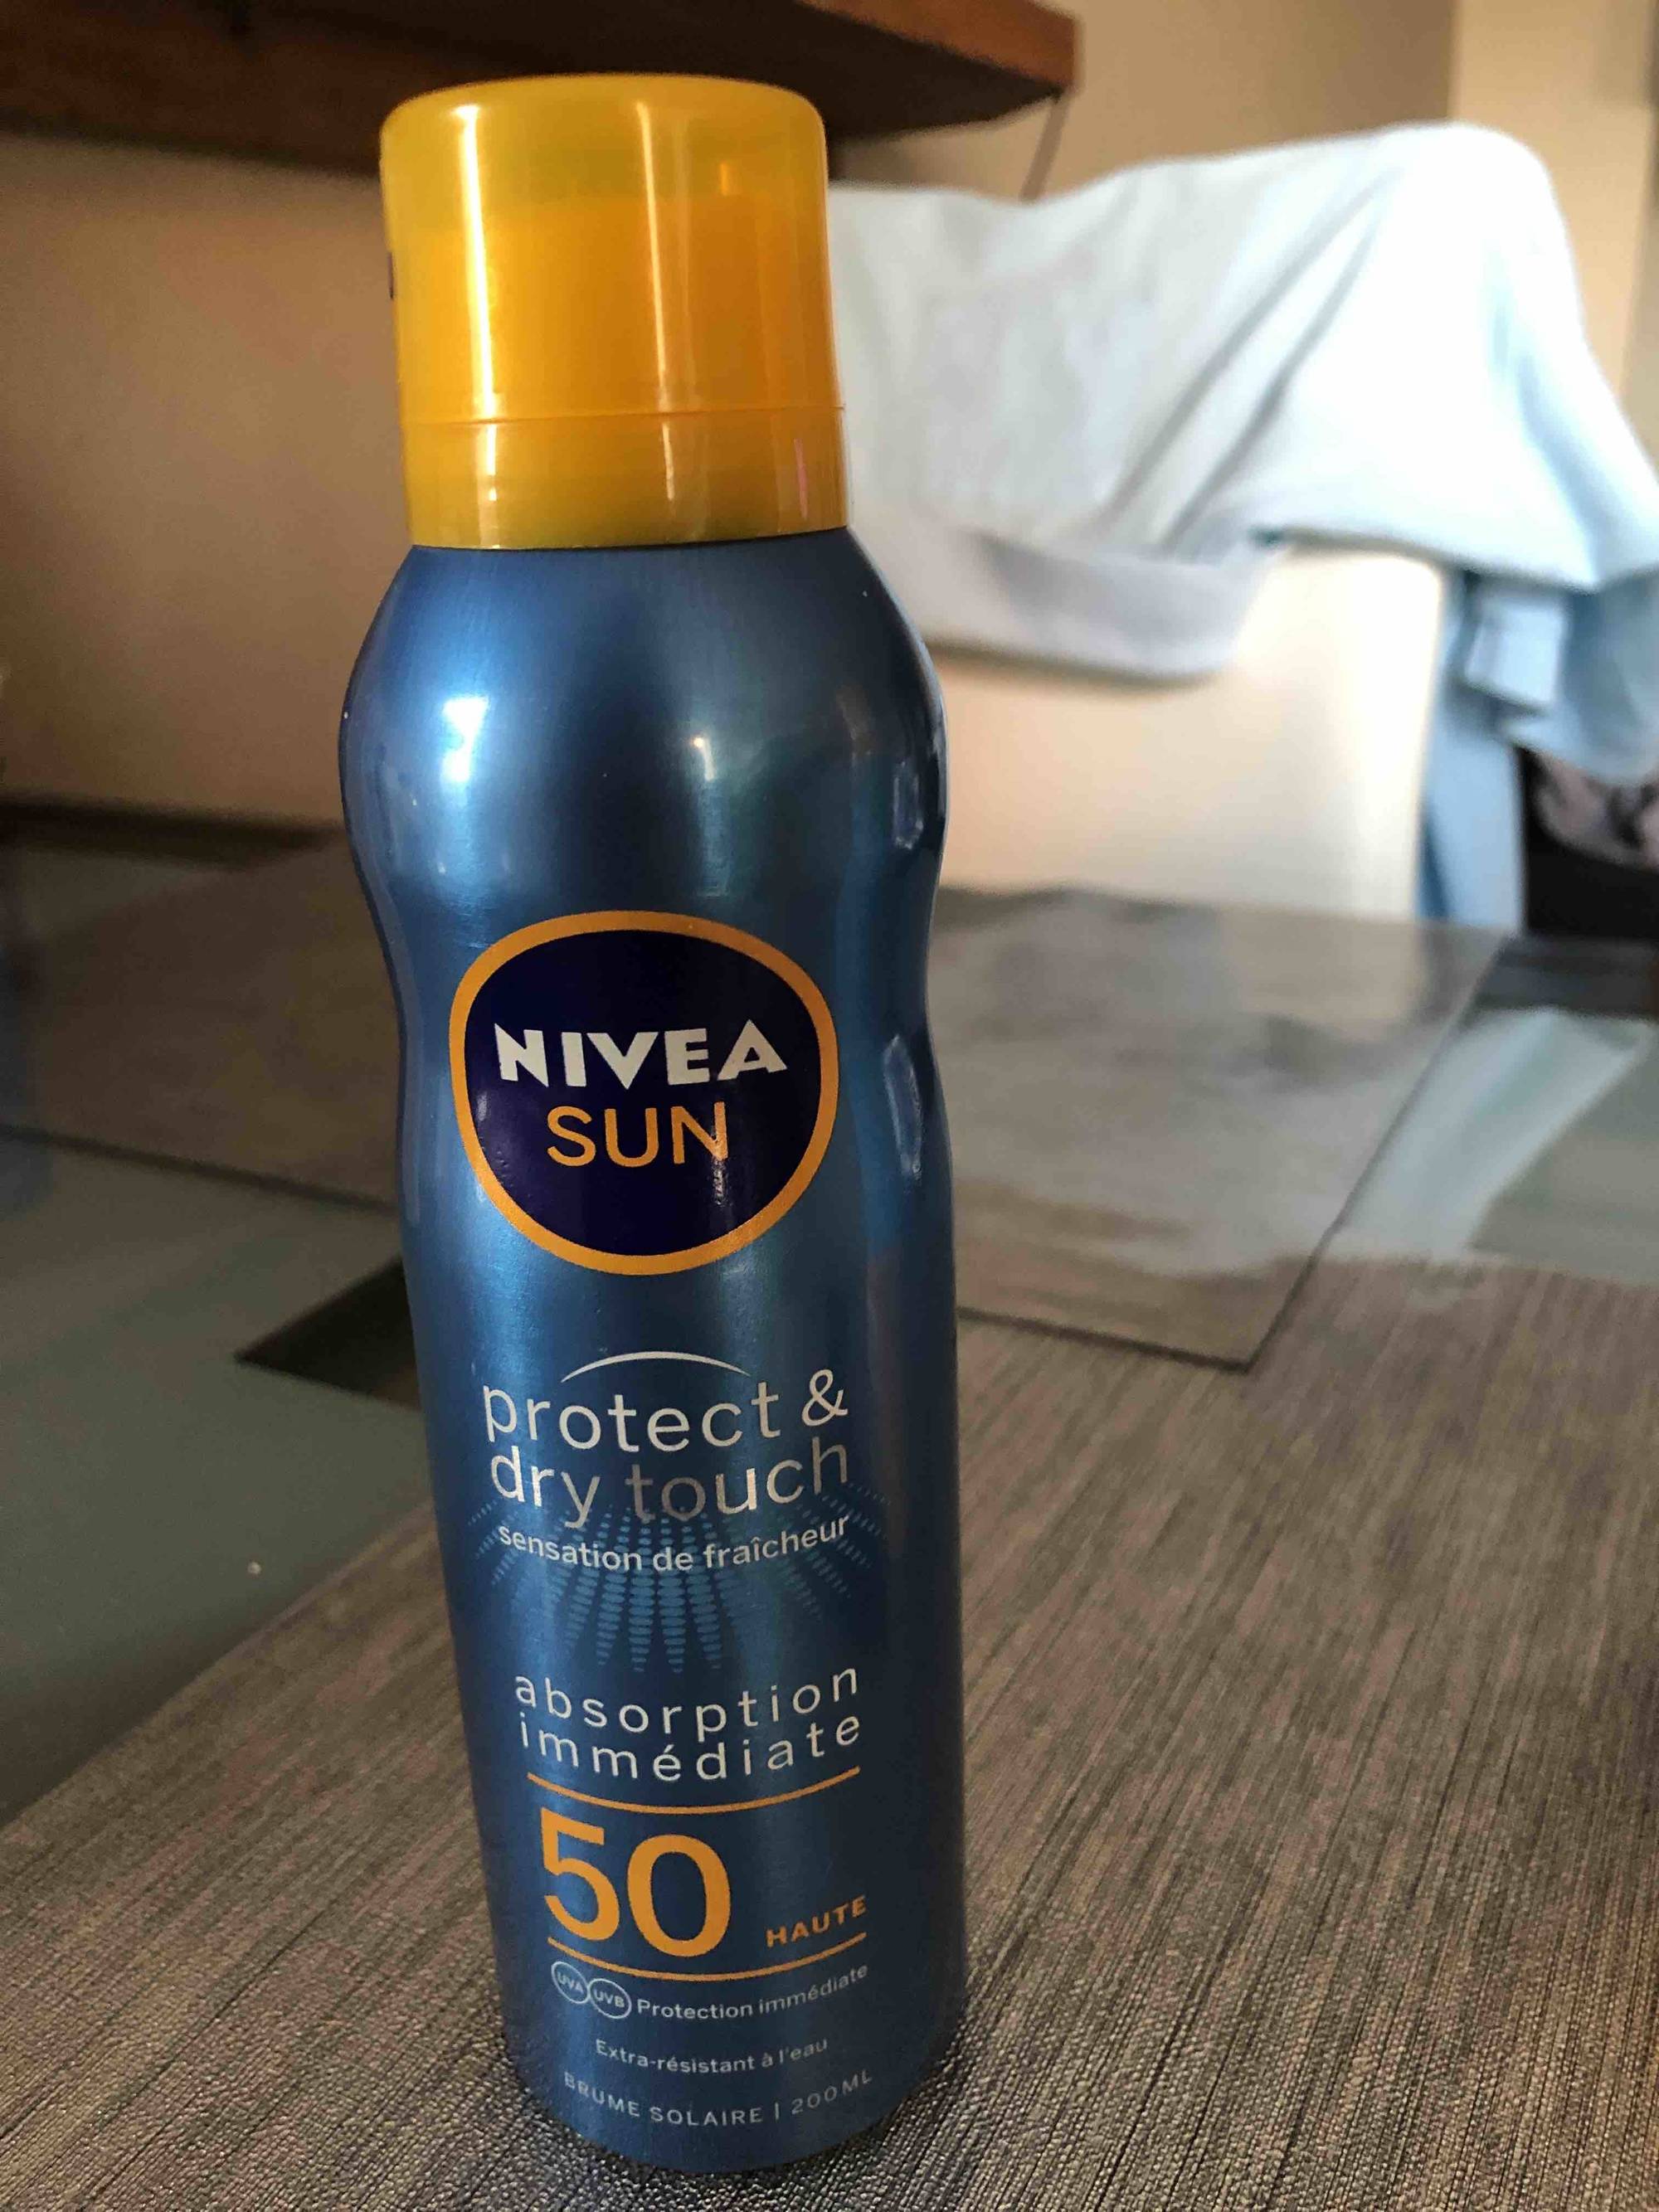 NIVEA - Sun protect & dry touch - Brume solaire 50 haute